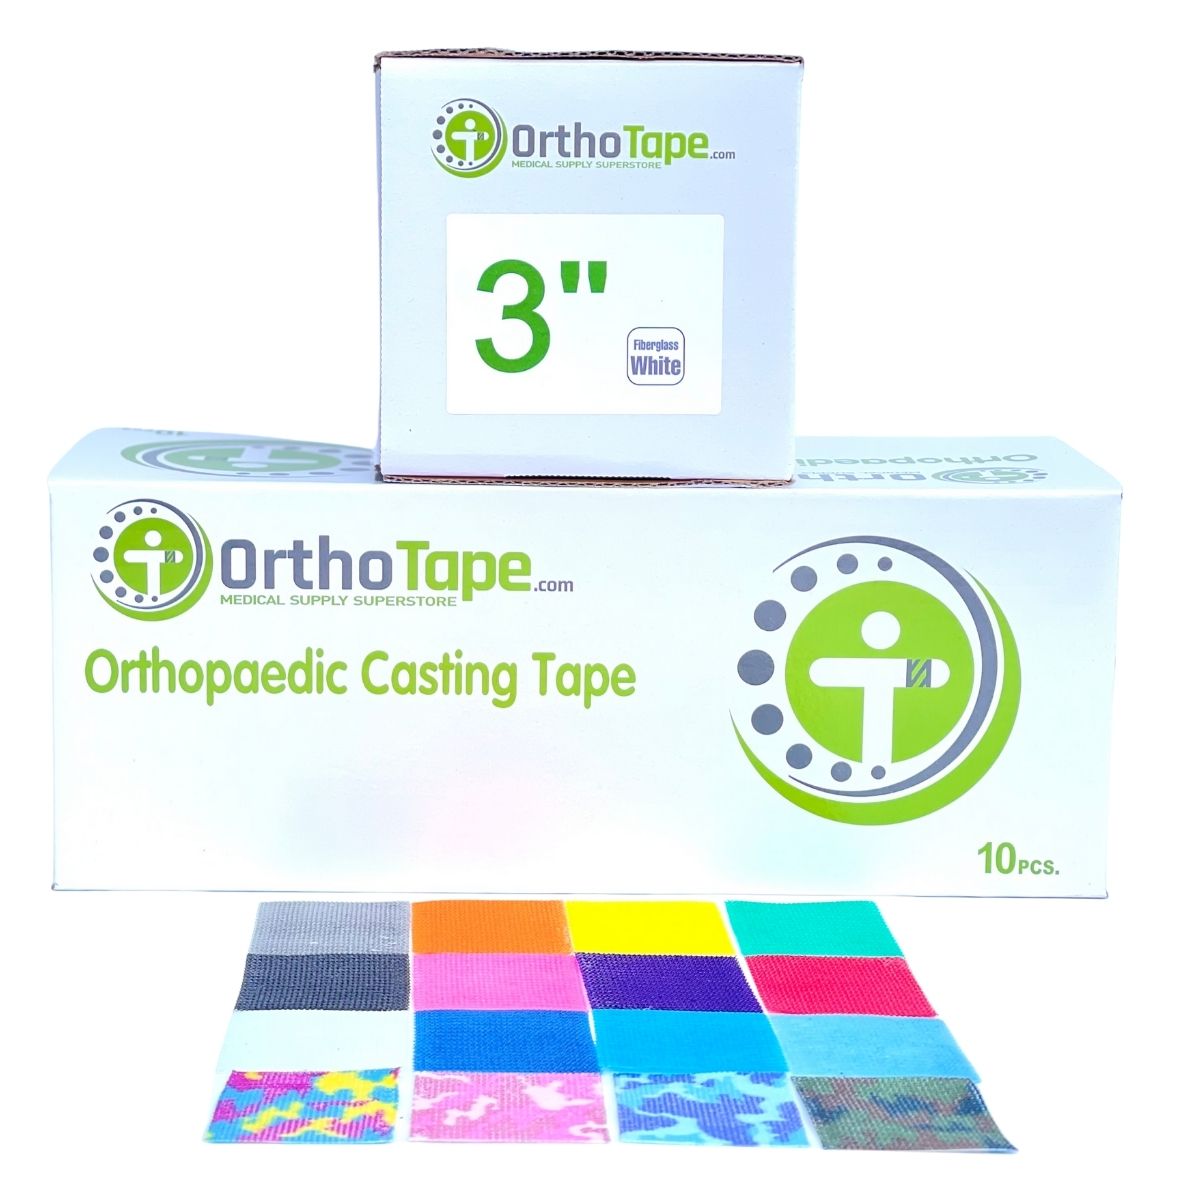 OrthoTape Premium Fiberglass Cast Tape |3 INCH - 10 ROLL BOX|